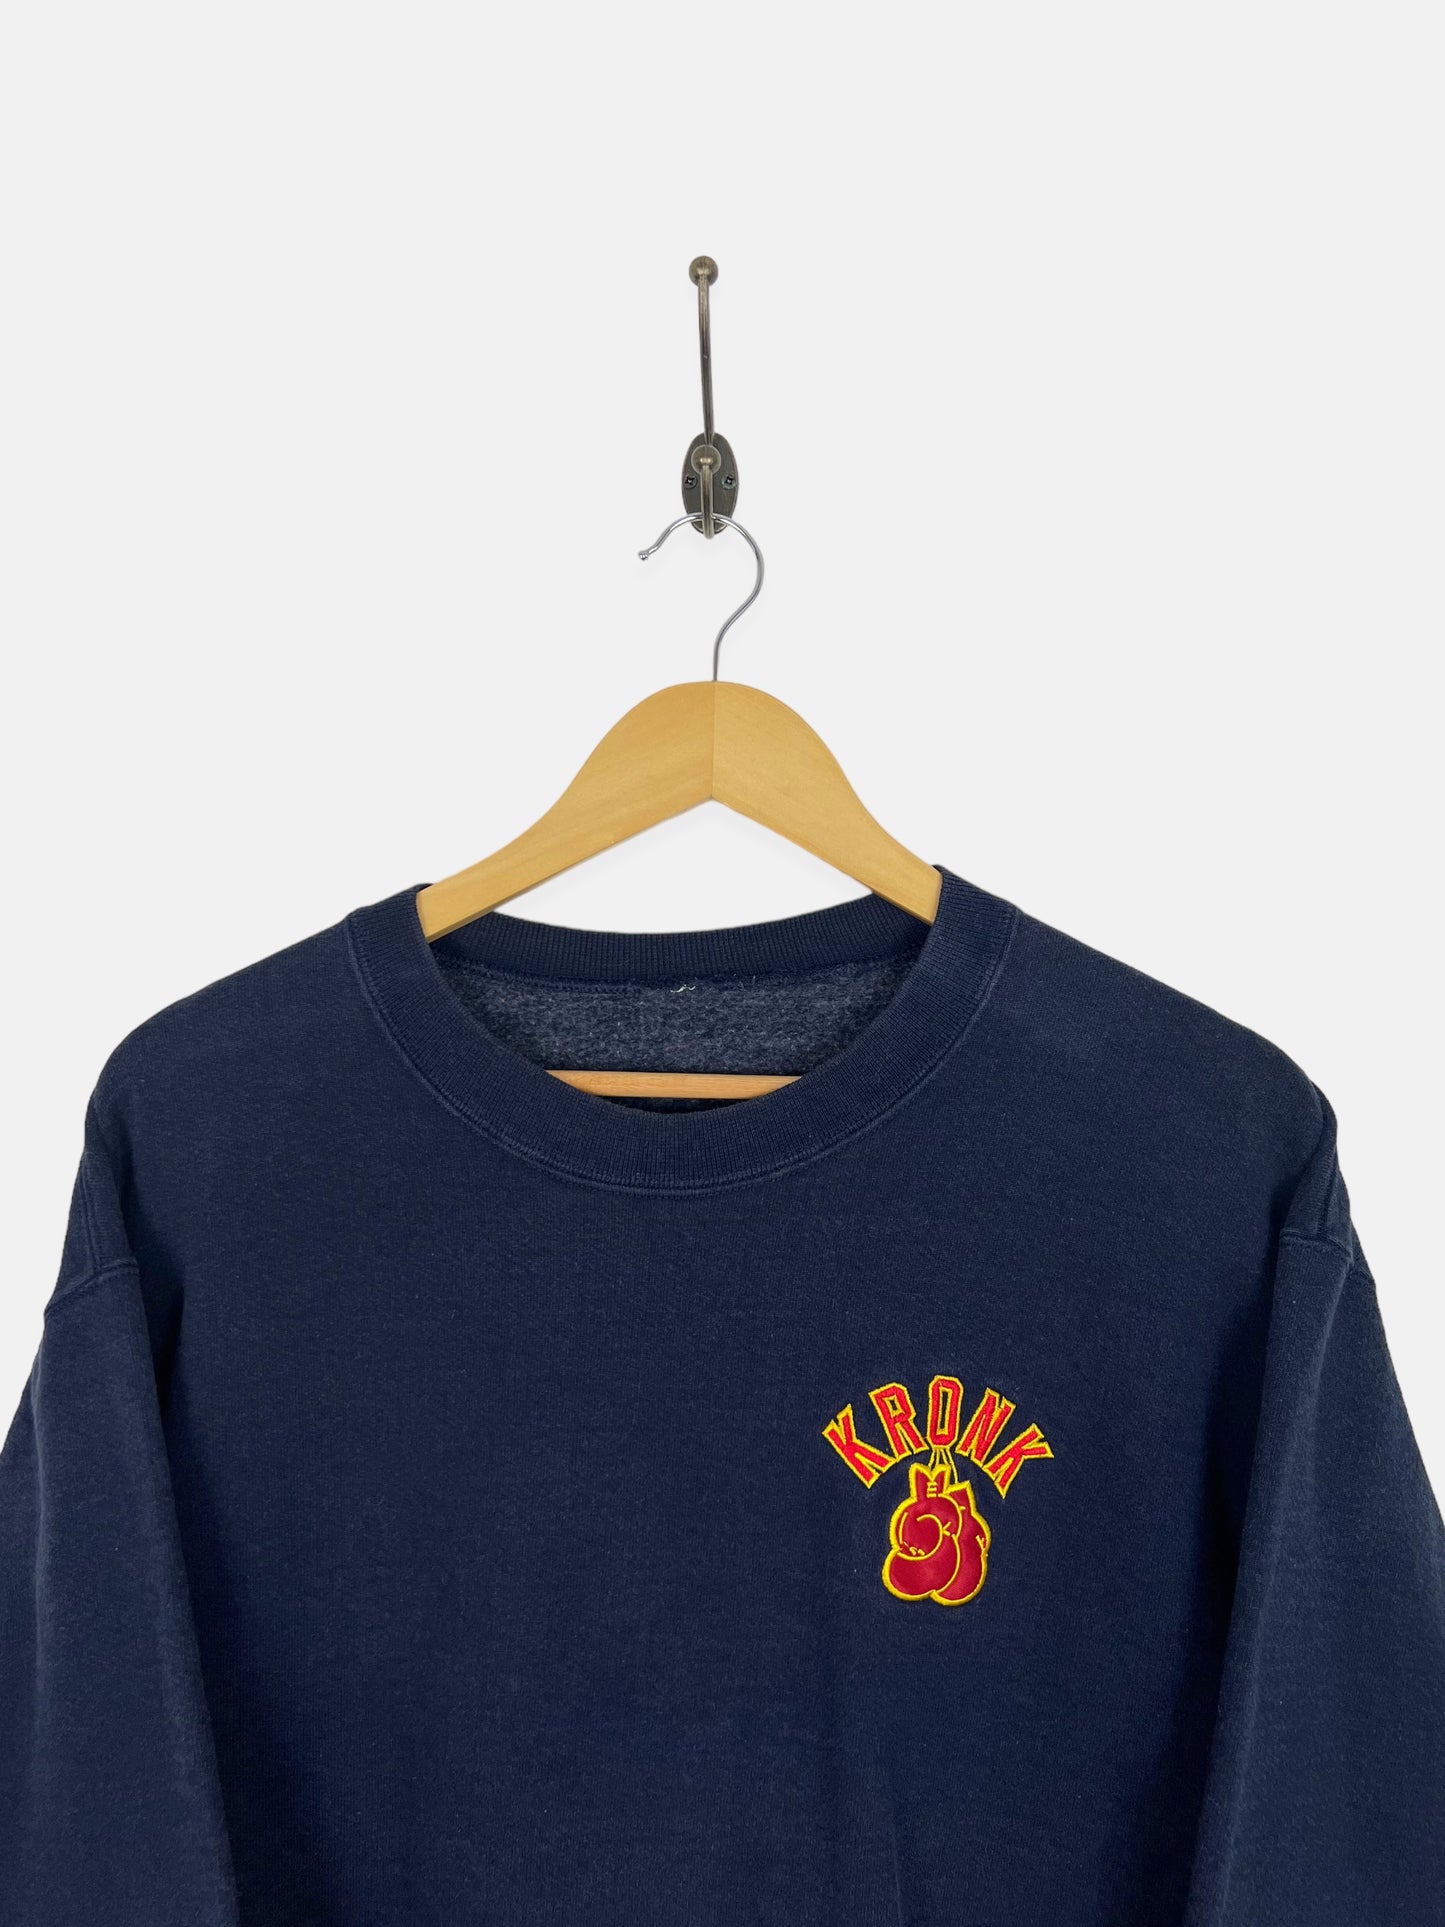 90's Kronk Boxing Team Embroidered Vintage Sweatshirt Size 12